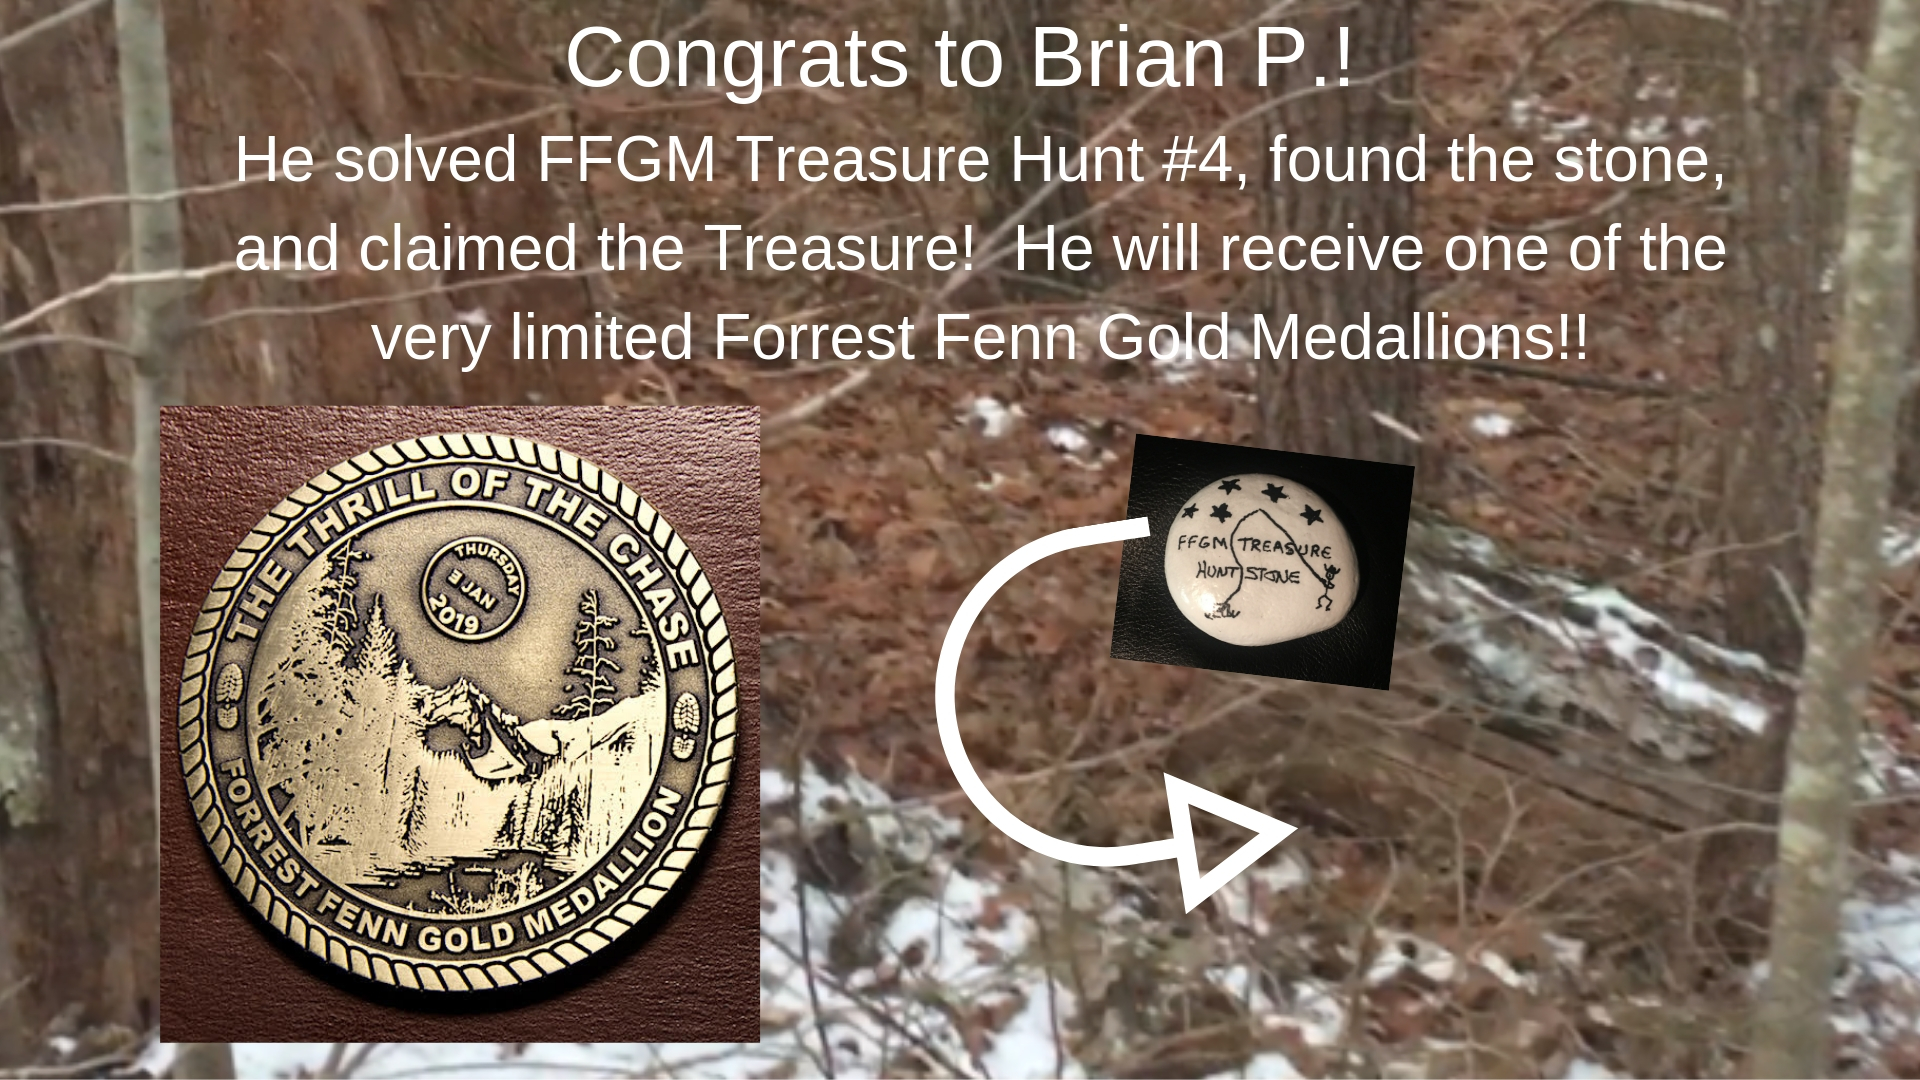 FFGM Treasure Hunt #4 Solution and Winner’s Story: Congrats Brian P.!